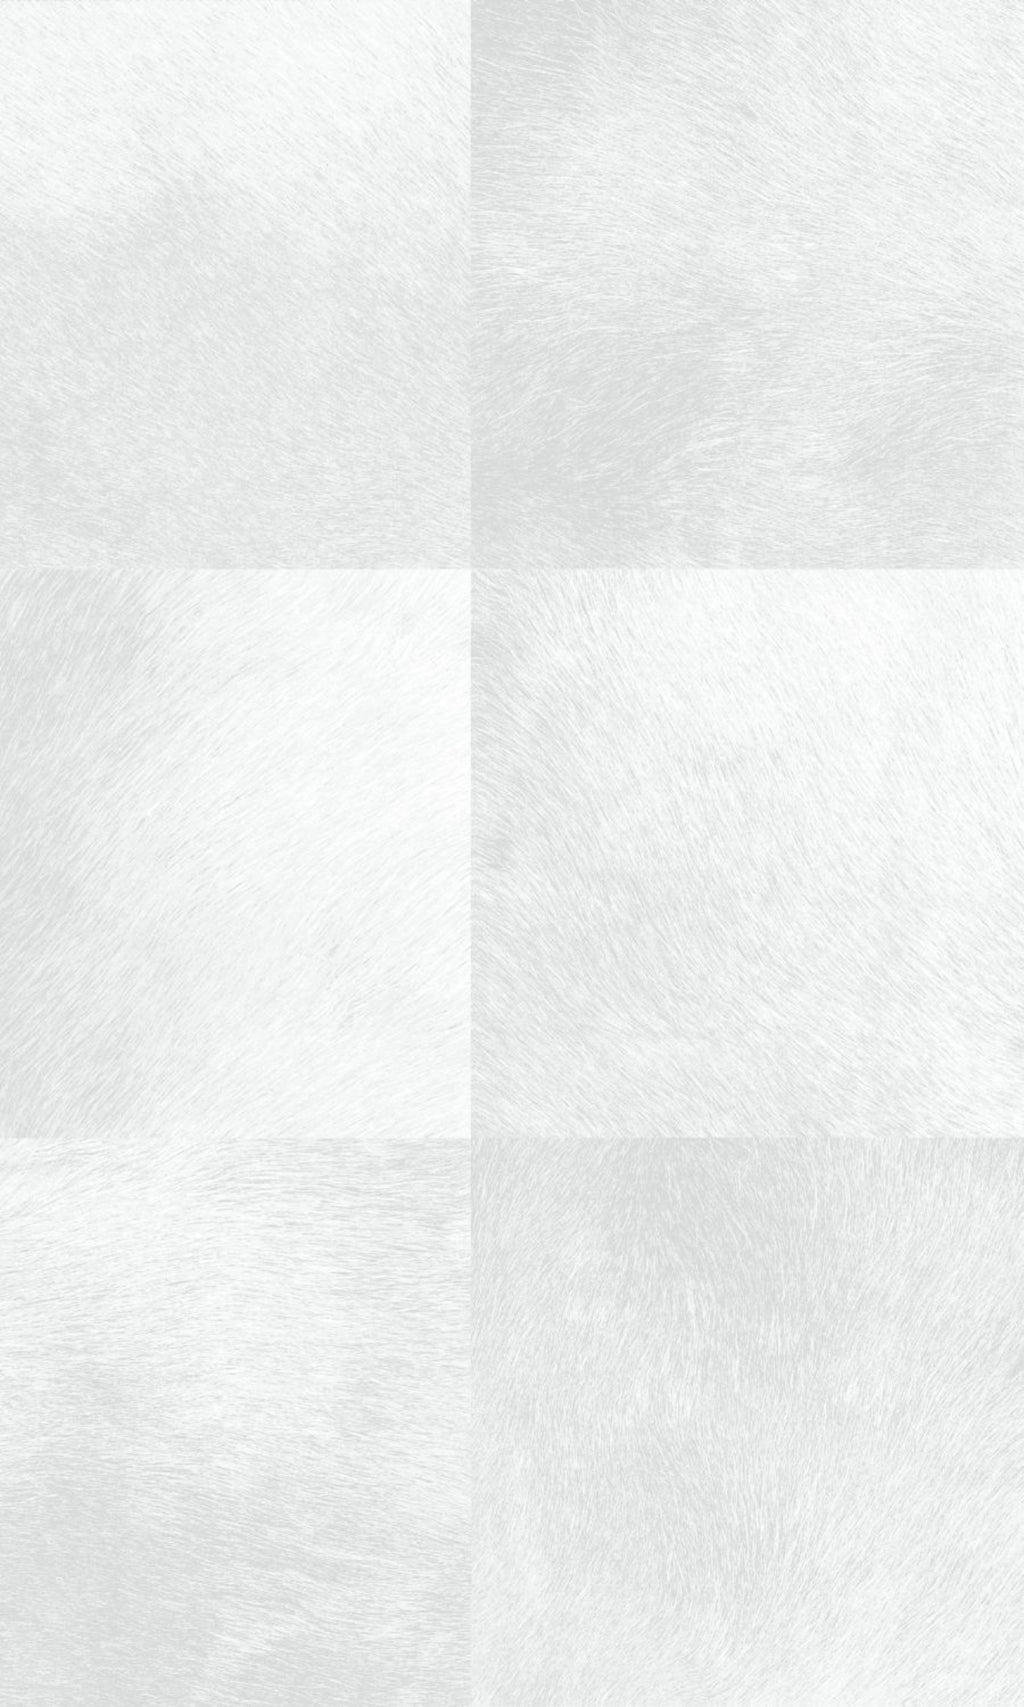 Origin Hide & Seek White Tile Geometric 347485